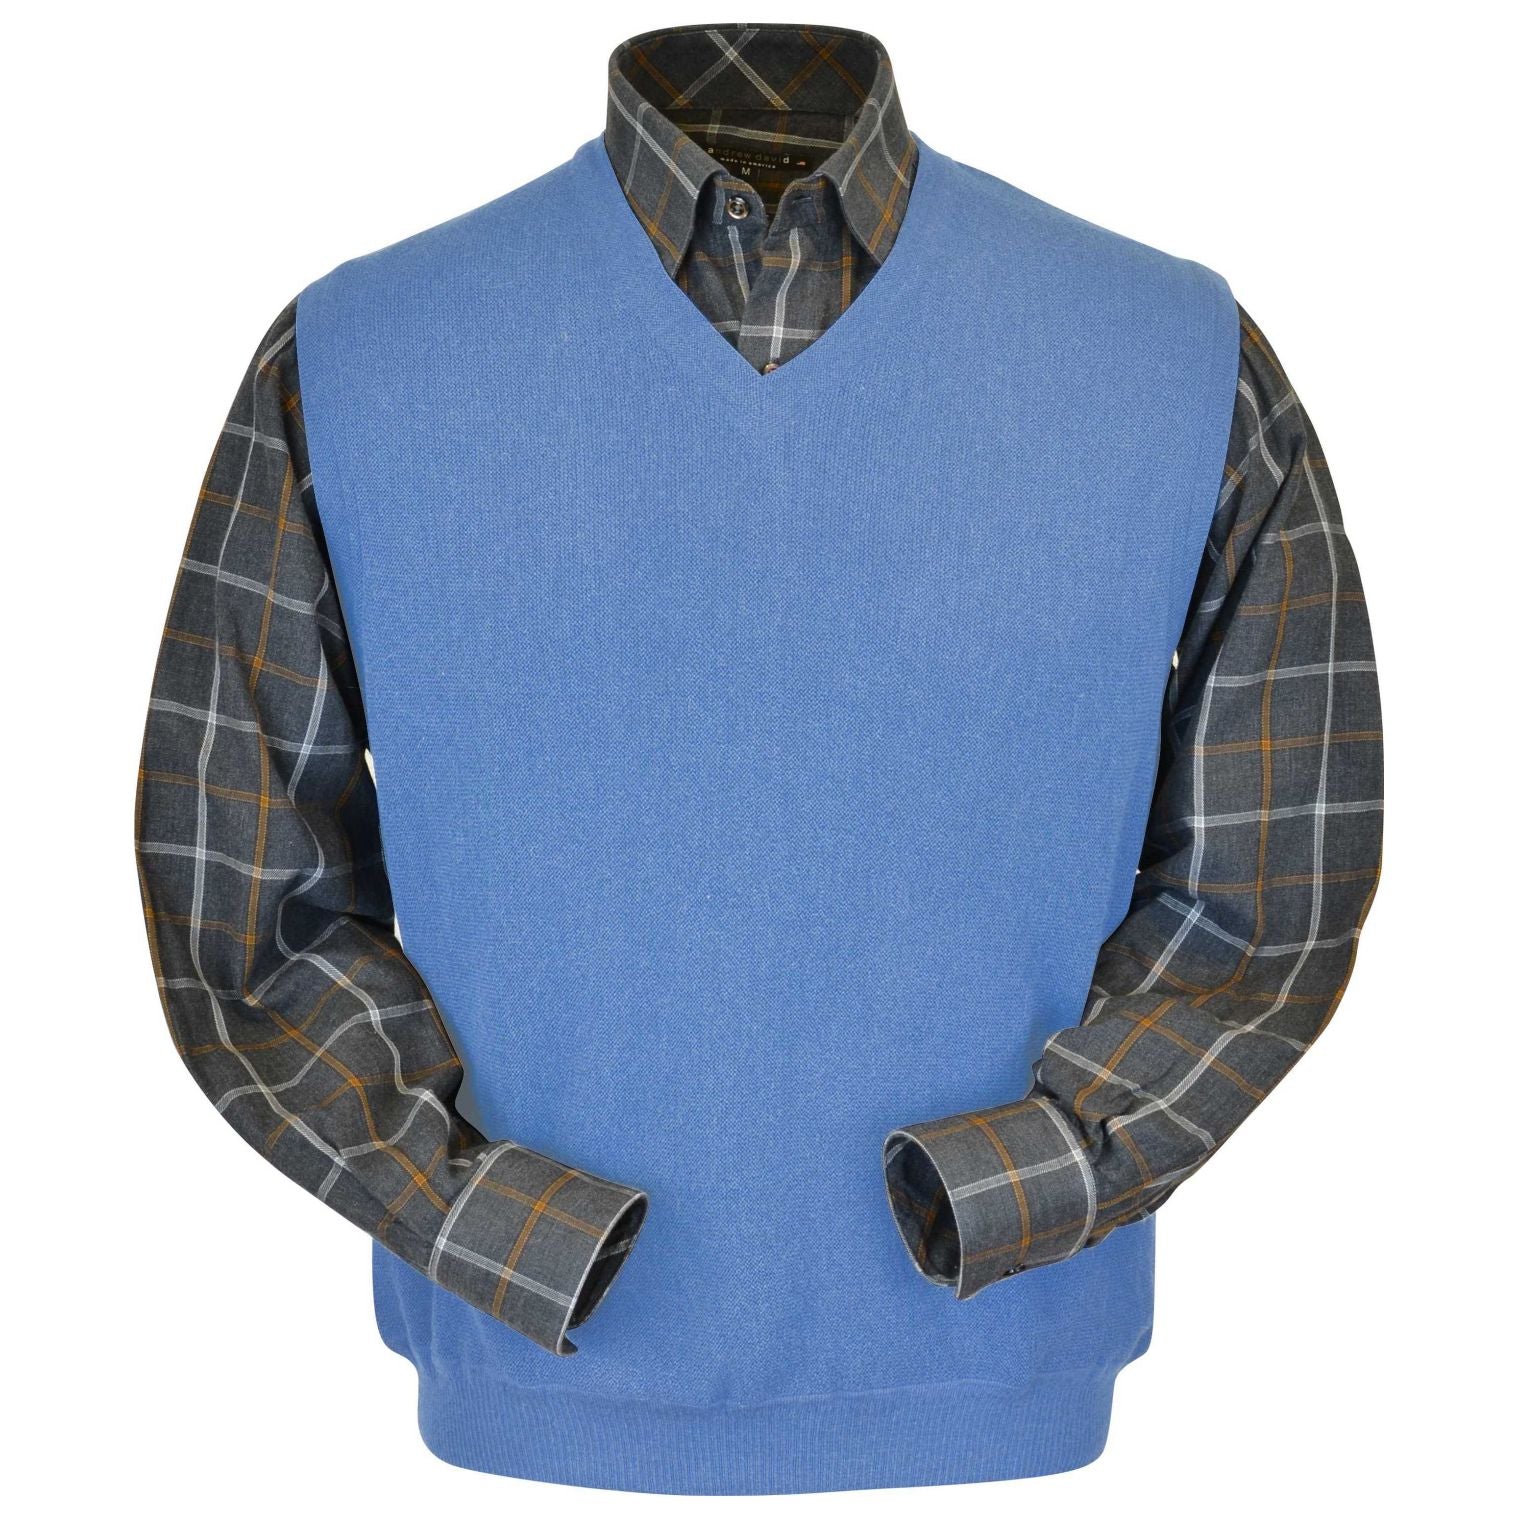 Baby Alpaca 'Links Stitch' V-Neck Sweater Vest in Atlantic Blue (Size Medium) by Peru Unlimited